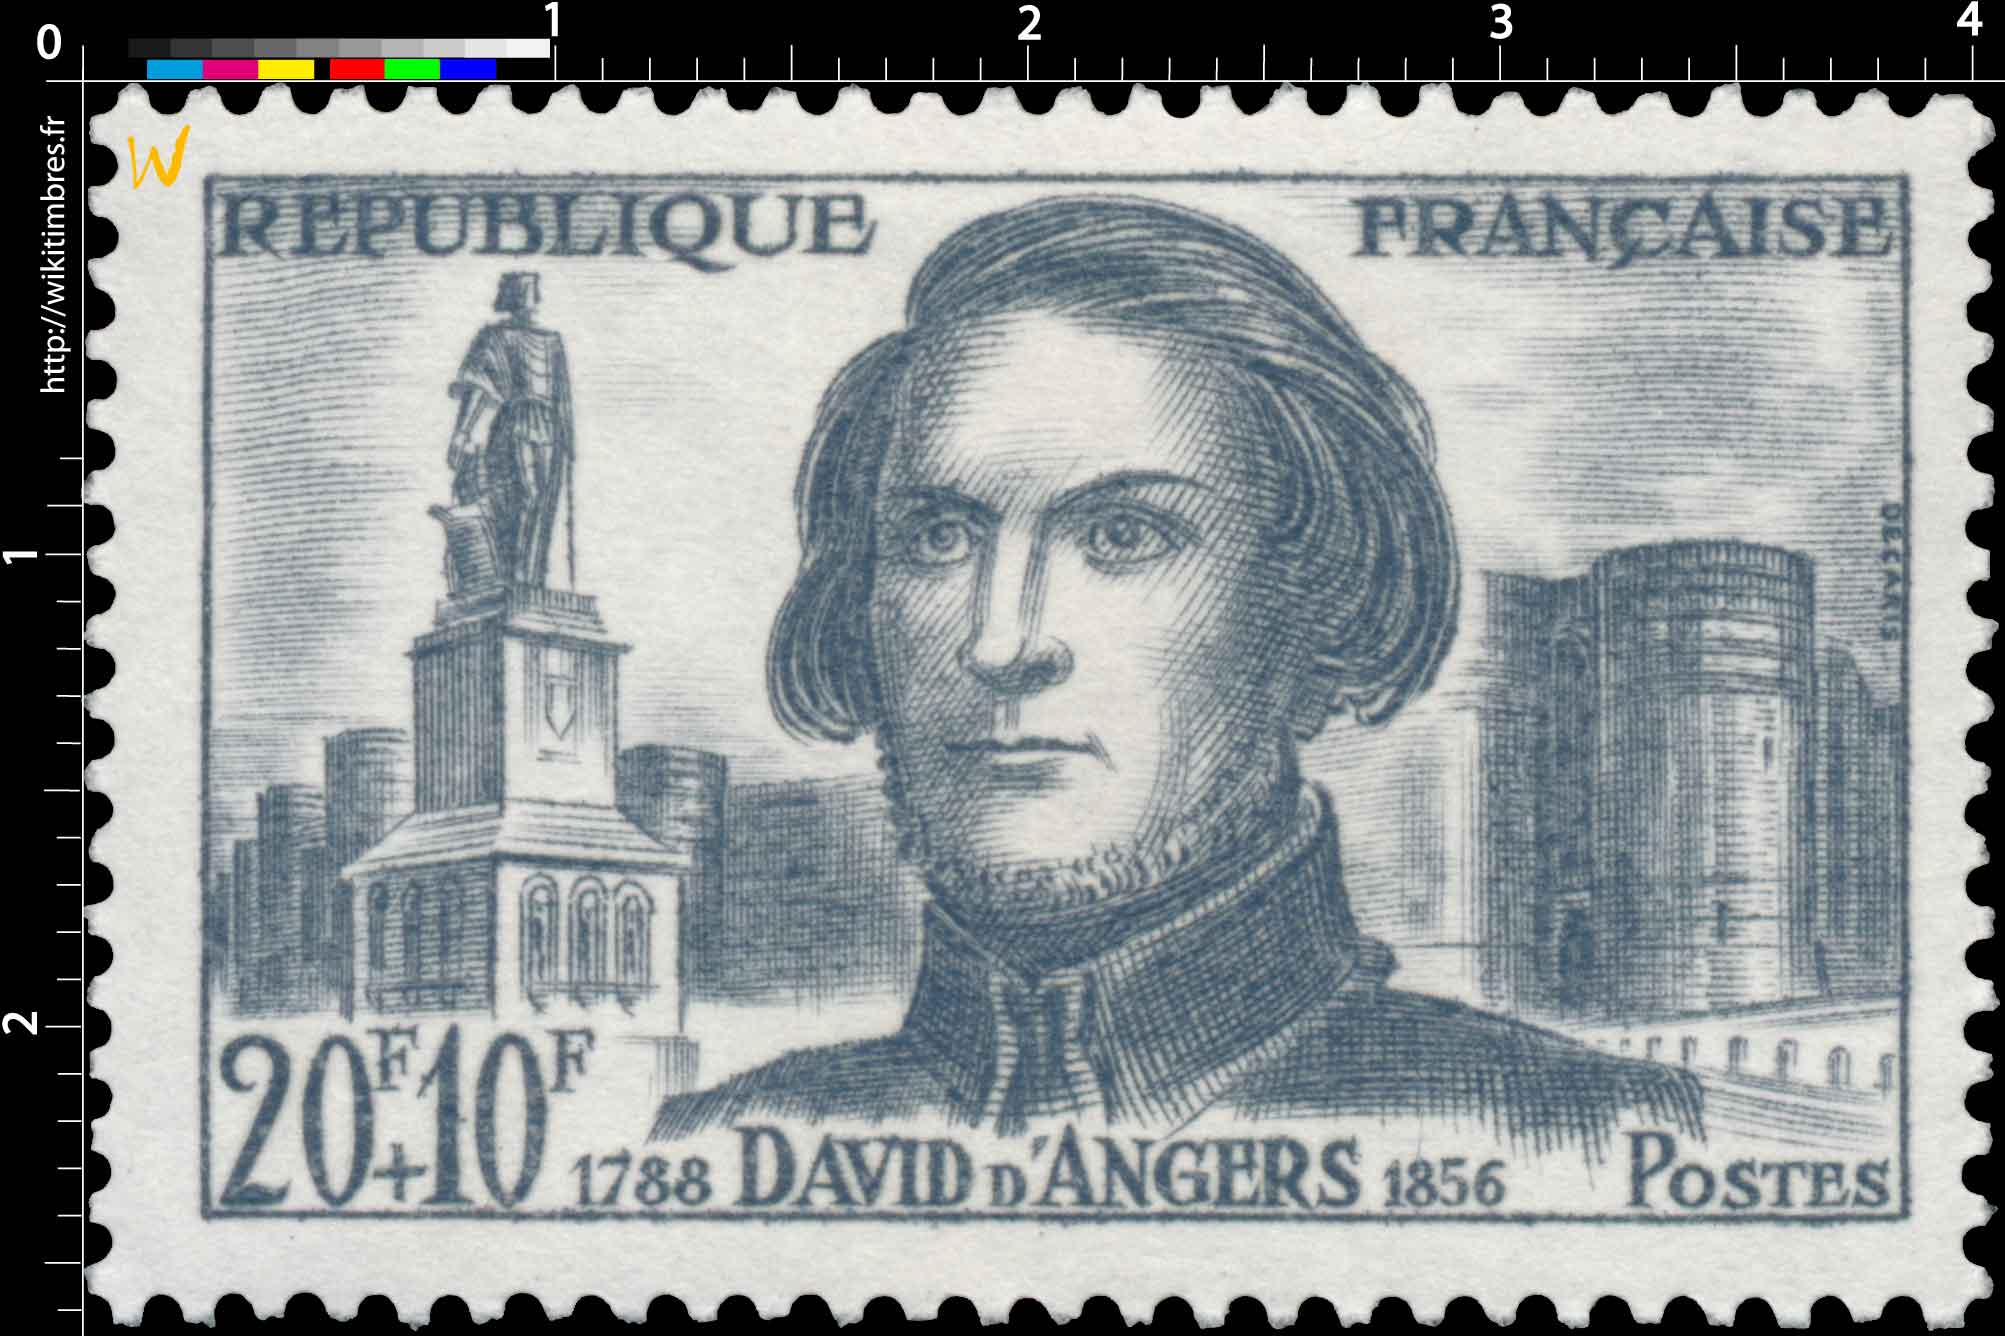 DAVID D'ANGERS 1788-1856